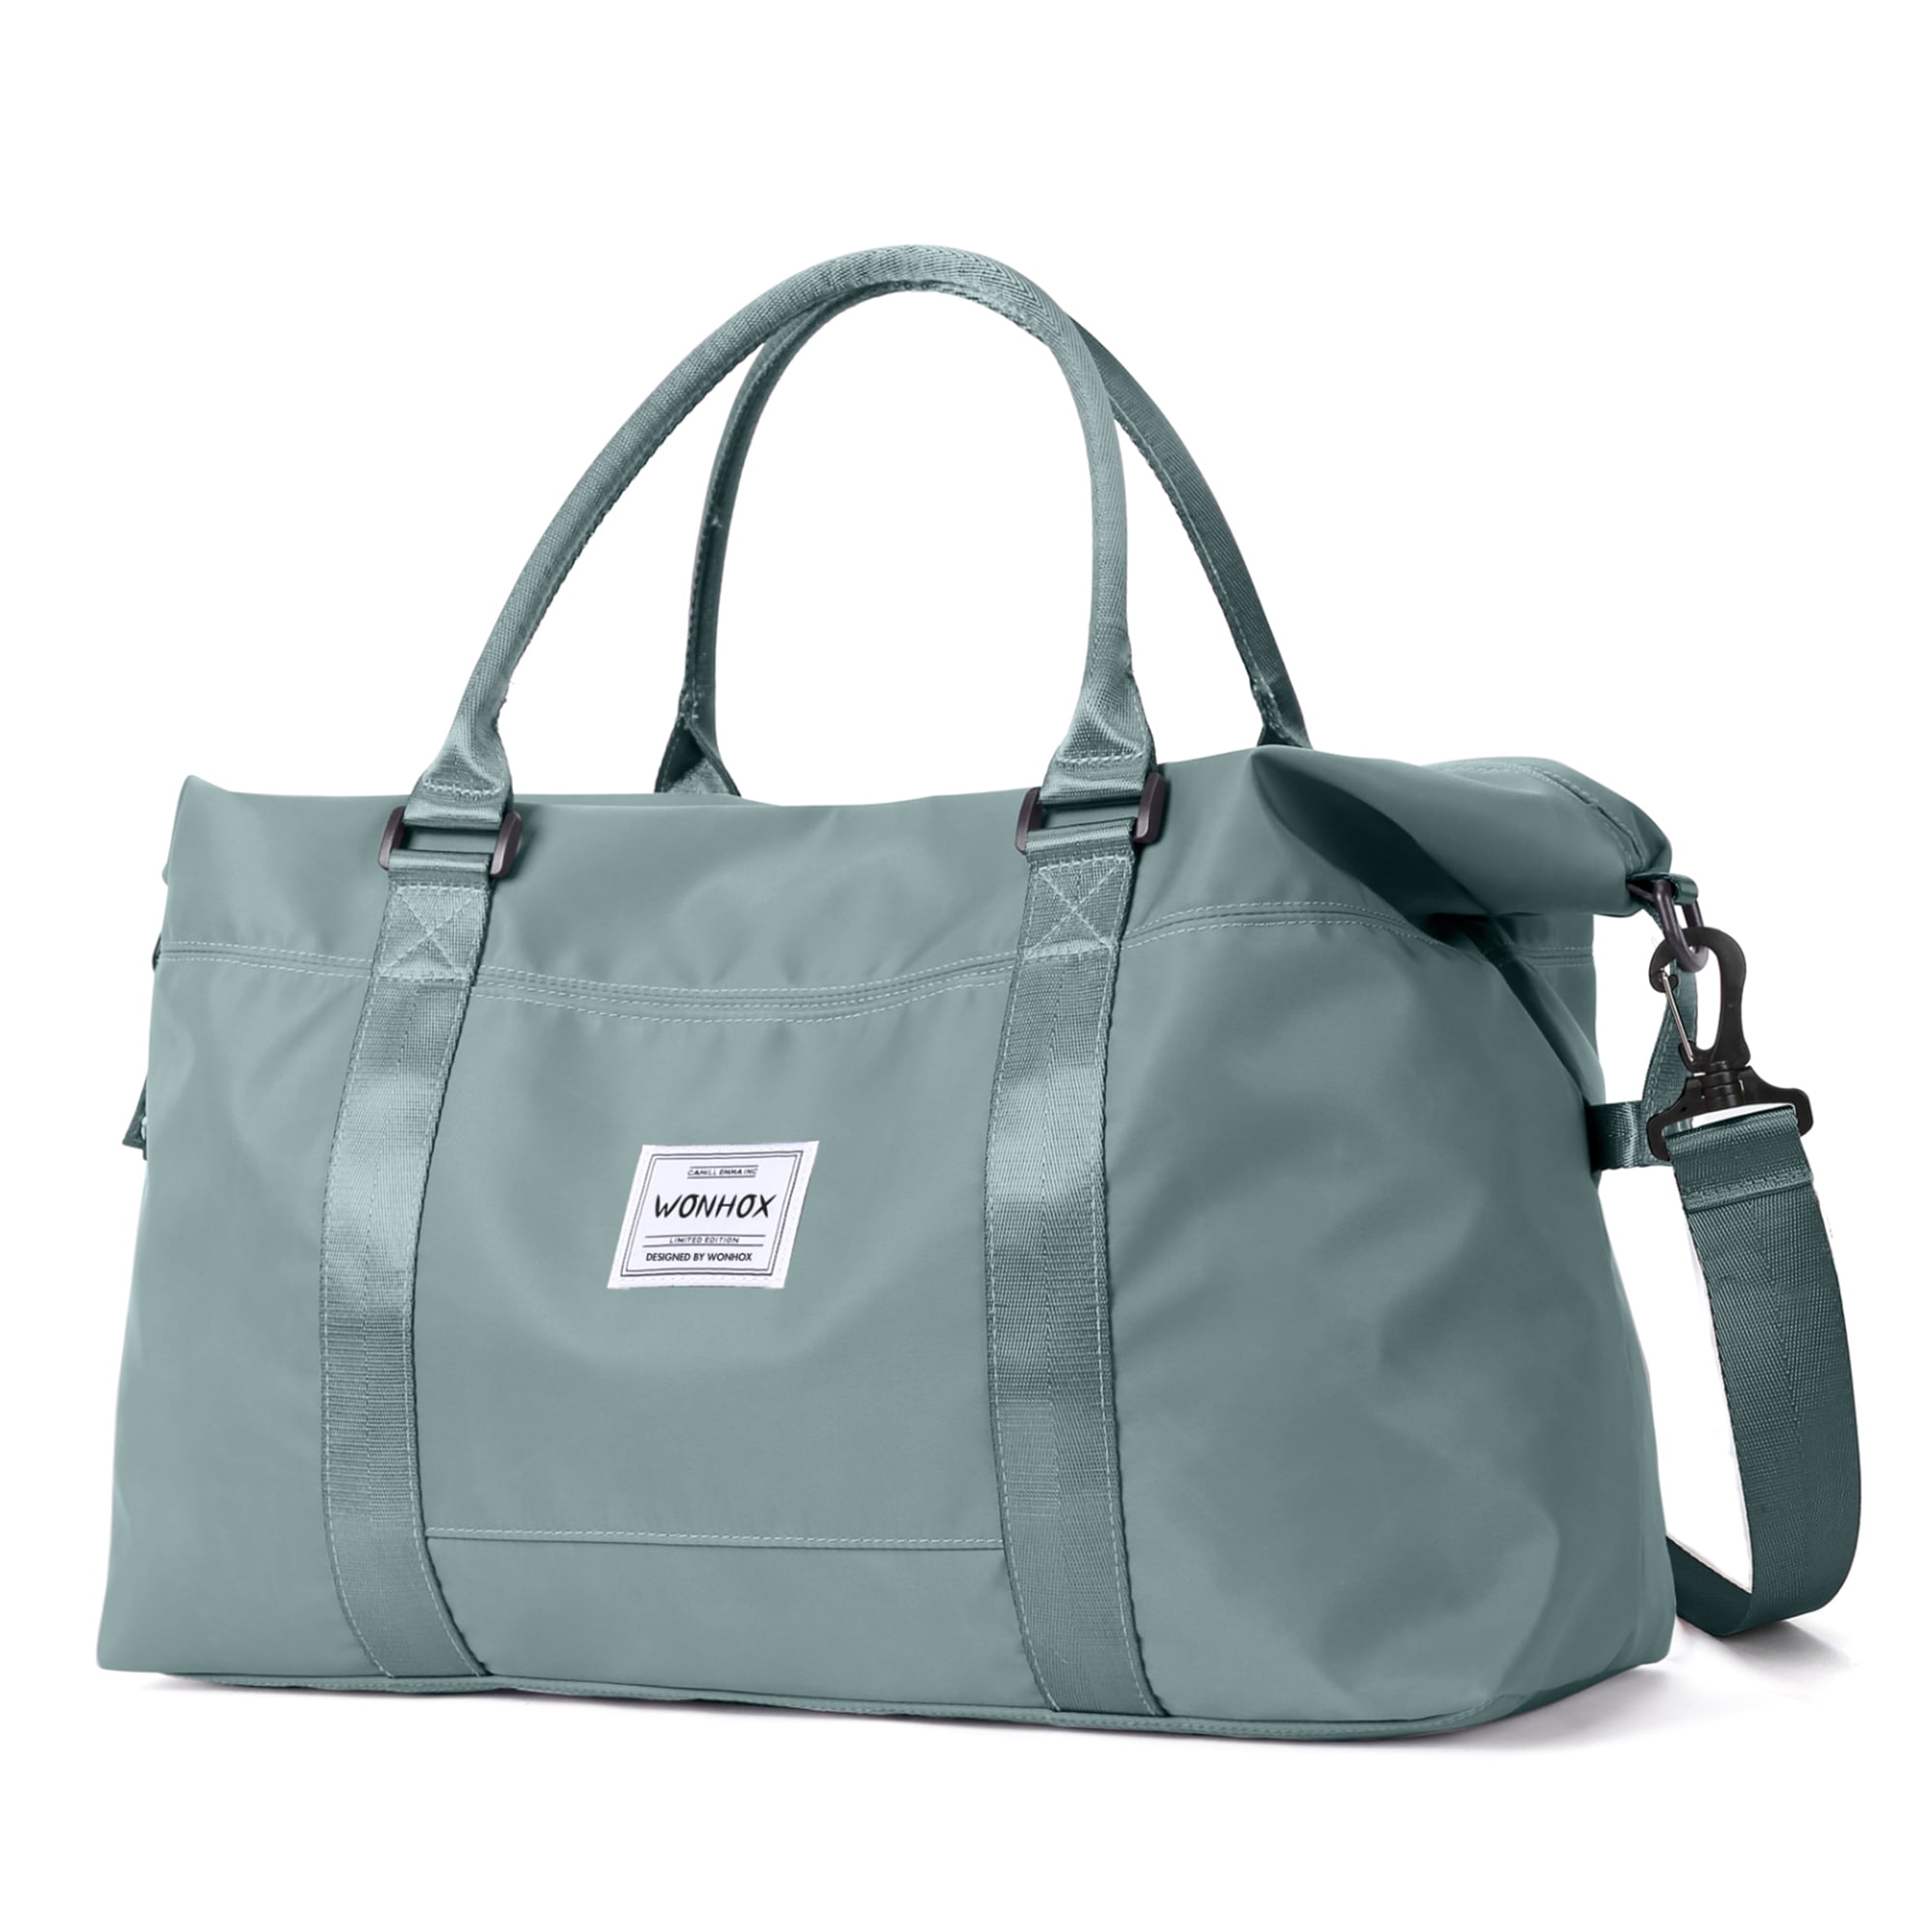 Sunjoy Tech Foldable Travel Duffle Bag for Women Girls Large Cute Pattern Weekender Overnight Carry on Bag Portable Travel Zipper Bag Handbag Sport